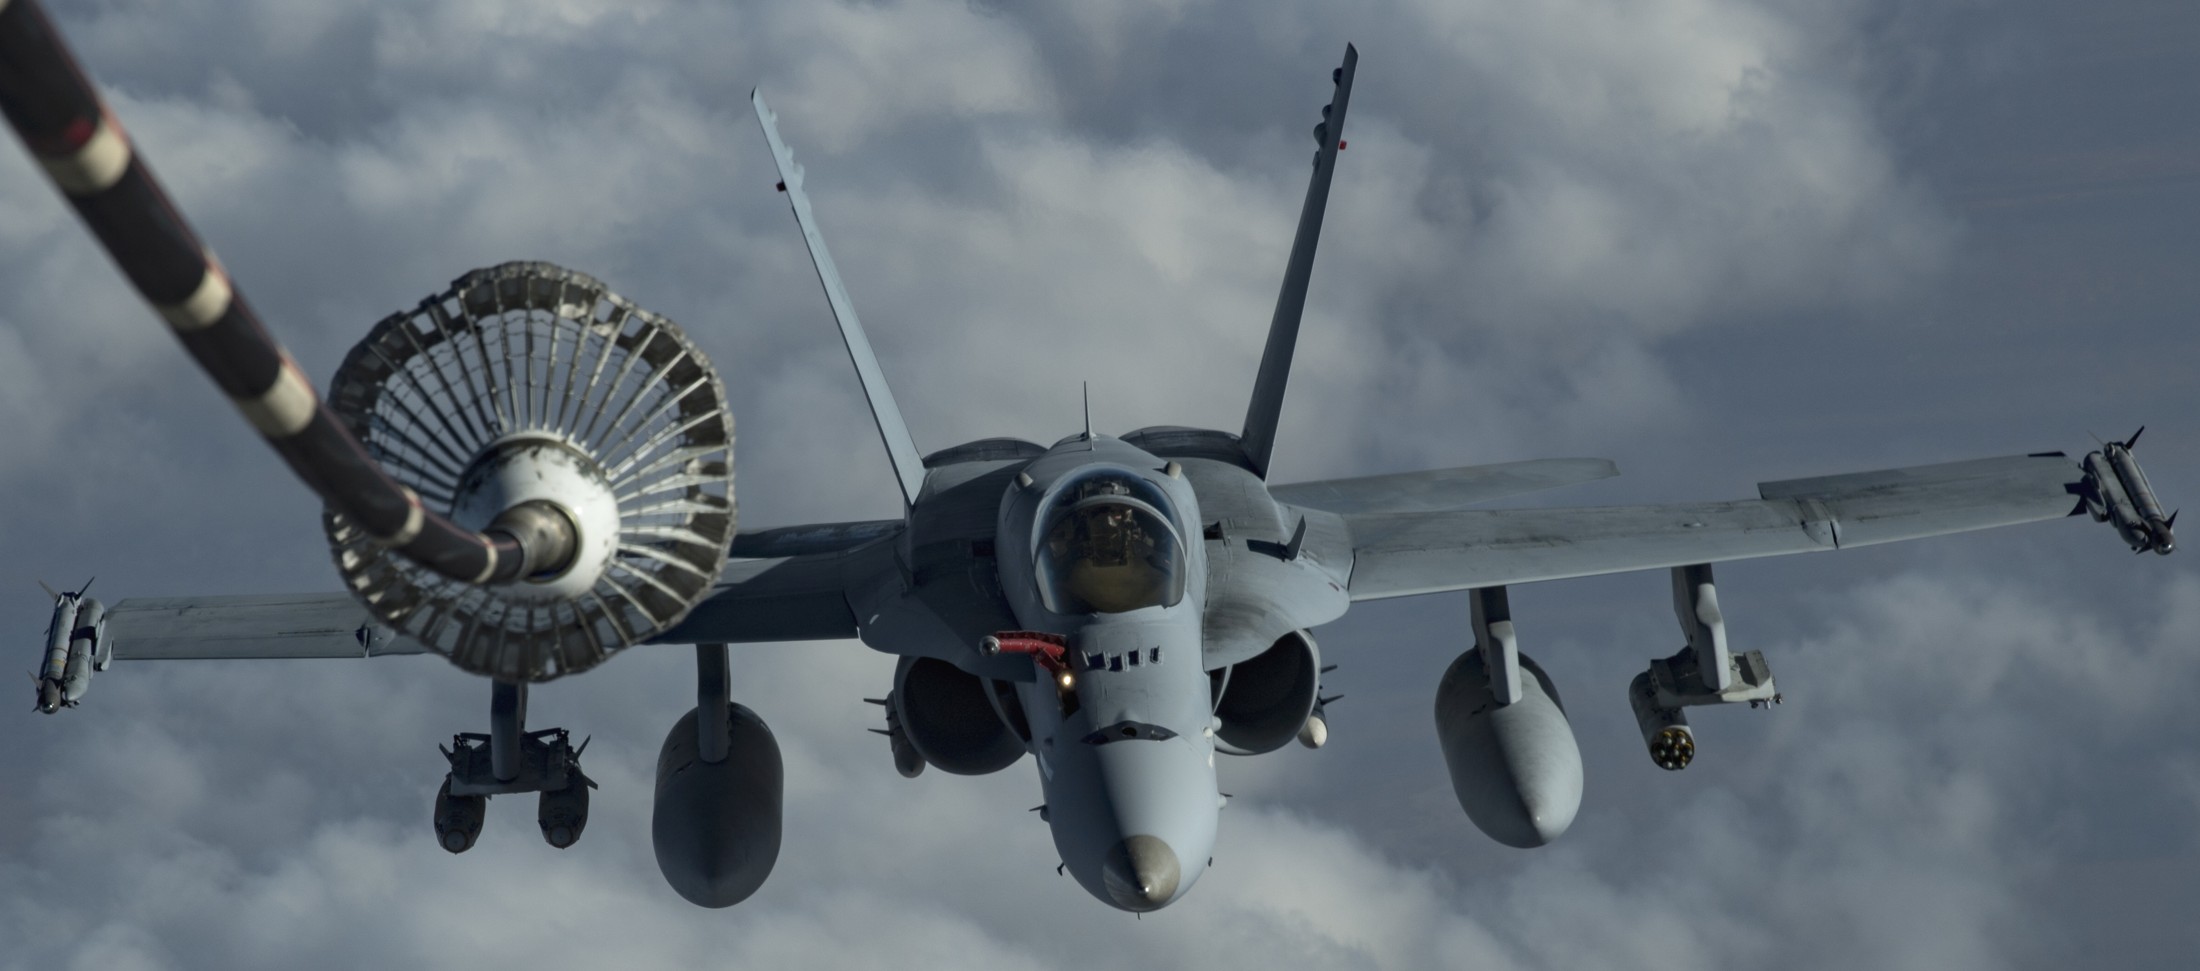 vmfa-251 thunderbolts marine fighter attack squadron usmc f/a-18c hornet centcom aor 165